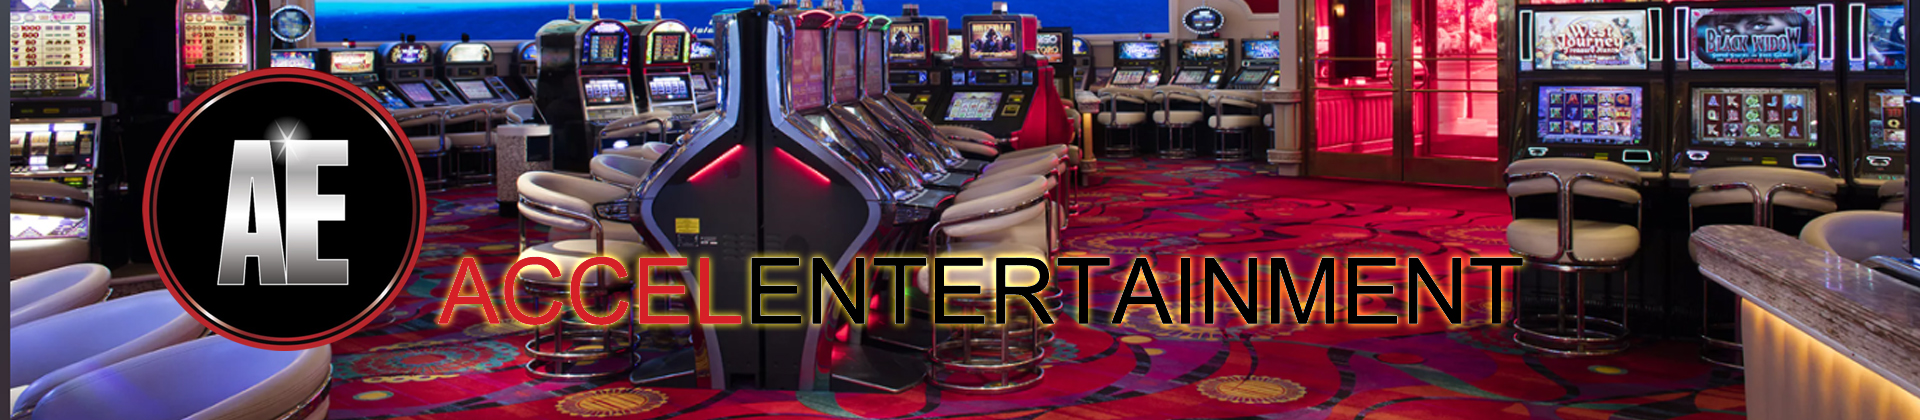 Accel Entertainment Acquired Louisiana Gambling Operator